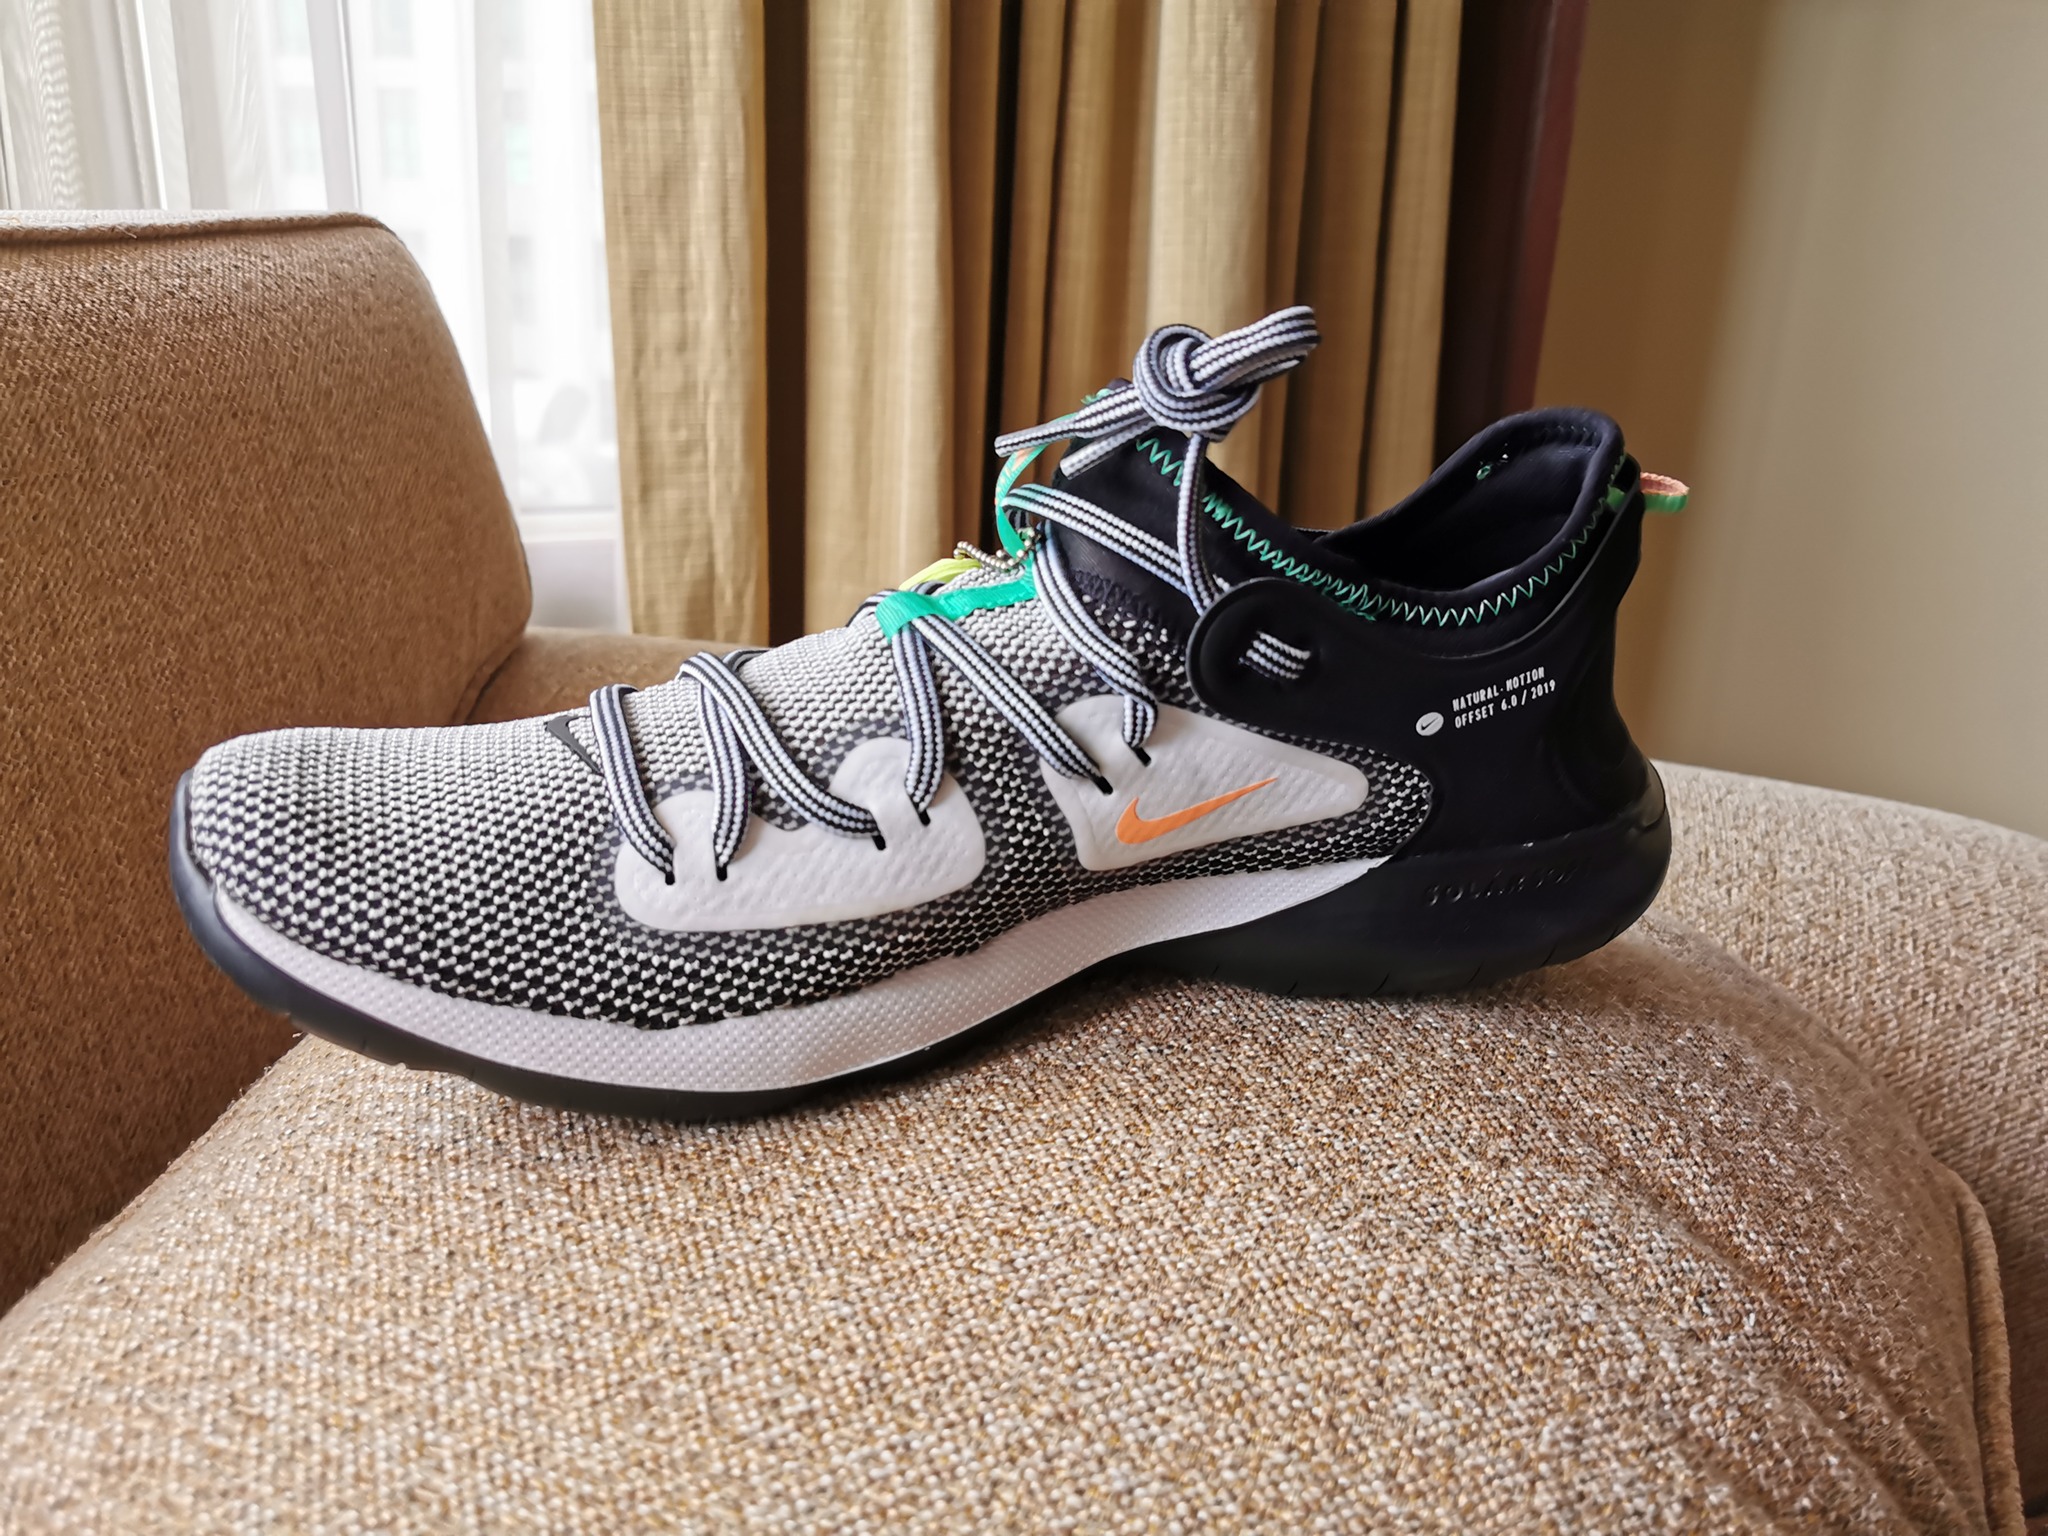 Nike Flex 2019 RN SE: The Stylish Men's Running Shoe – Pinoy Guy Guide